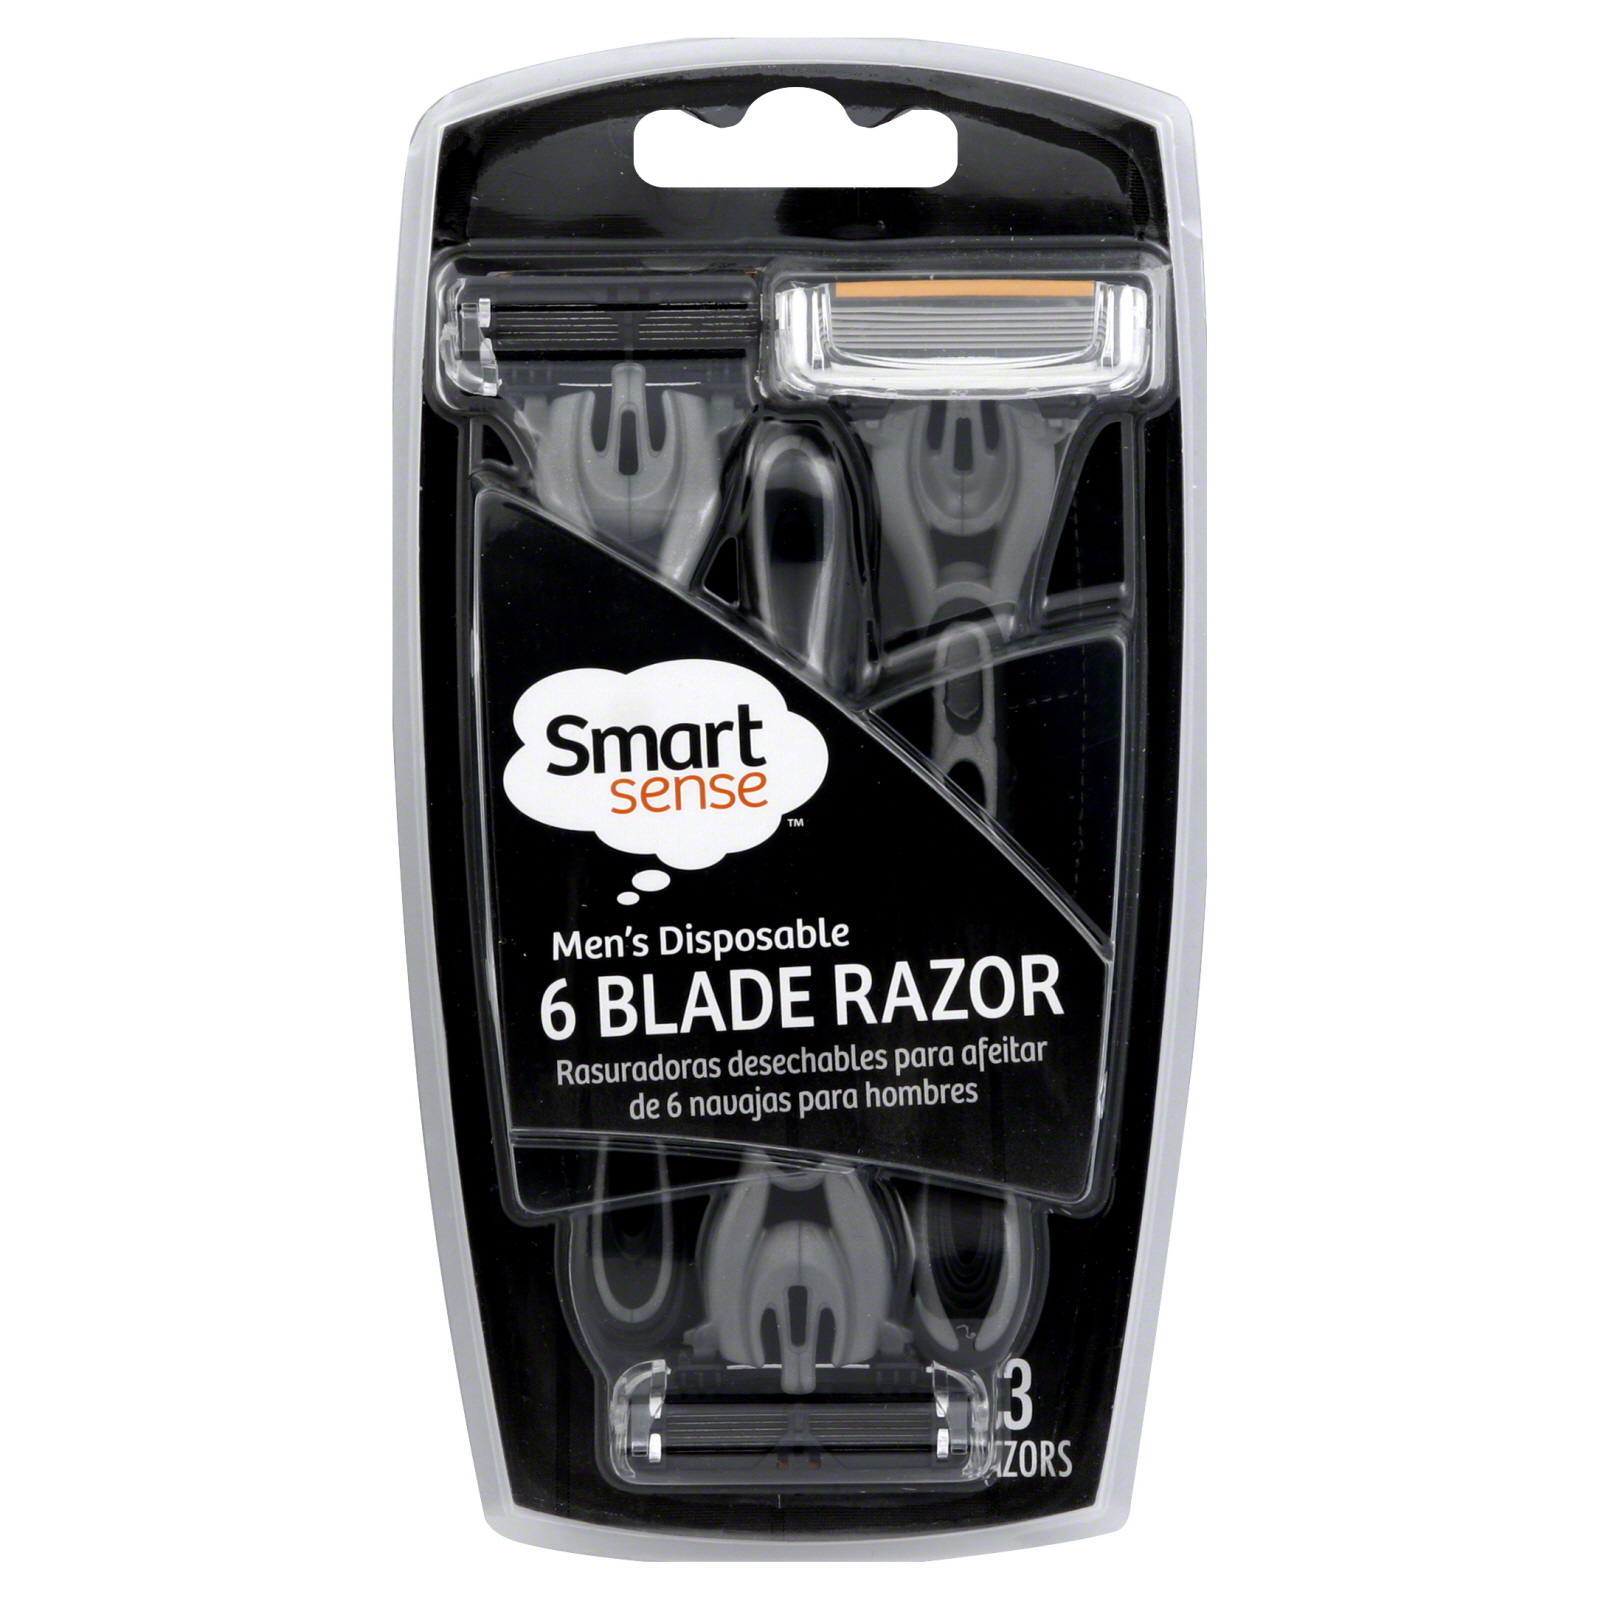 Smart Sense Razor, 6 Blade, Men's Disposable, 3 razors